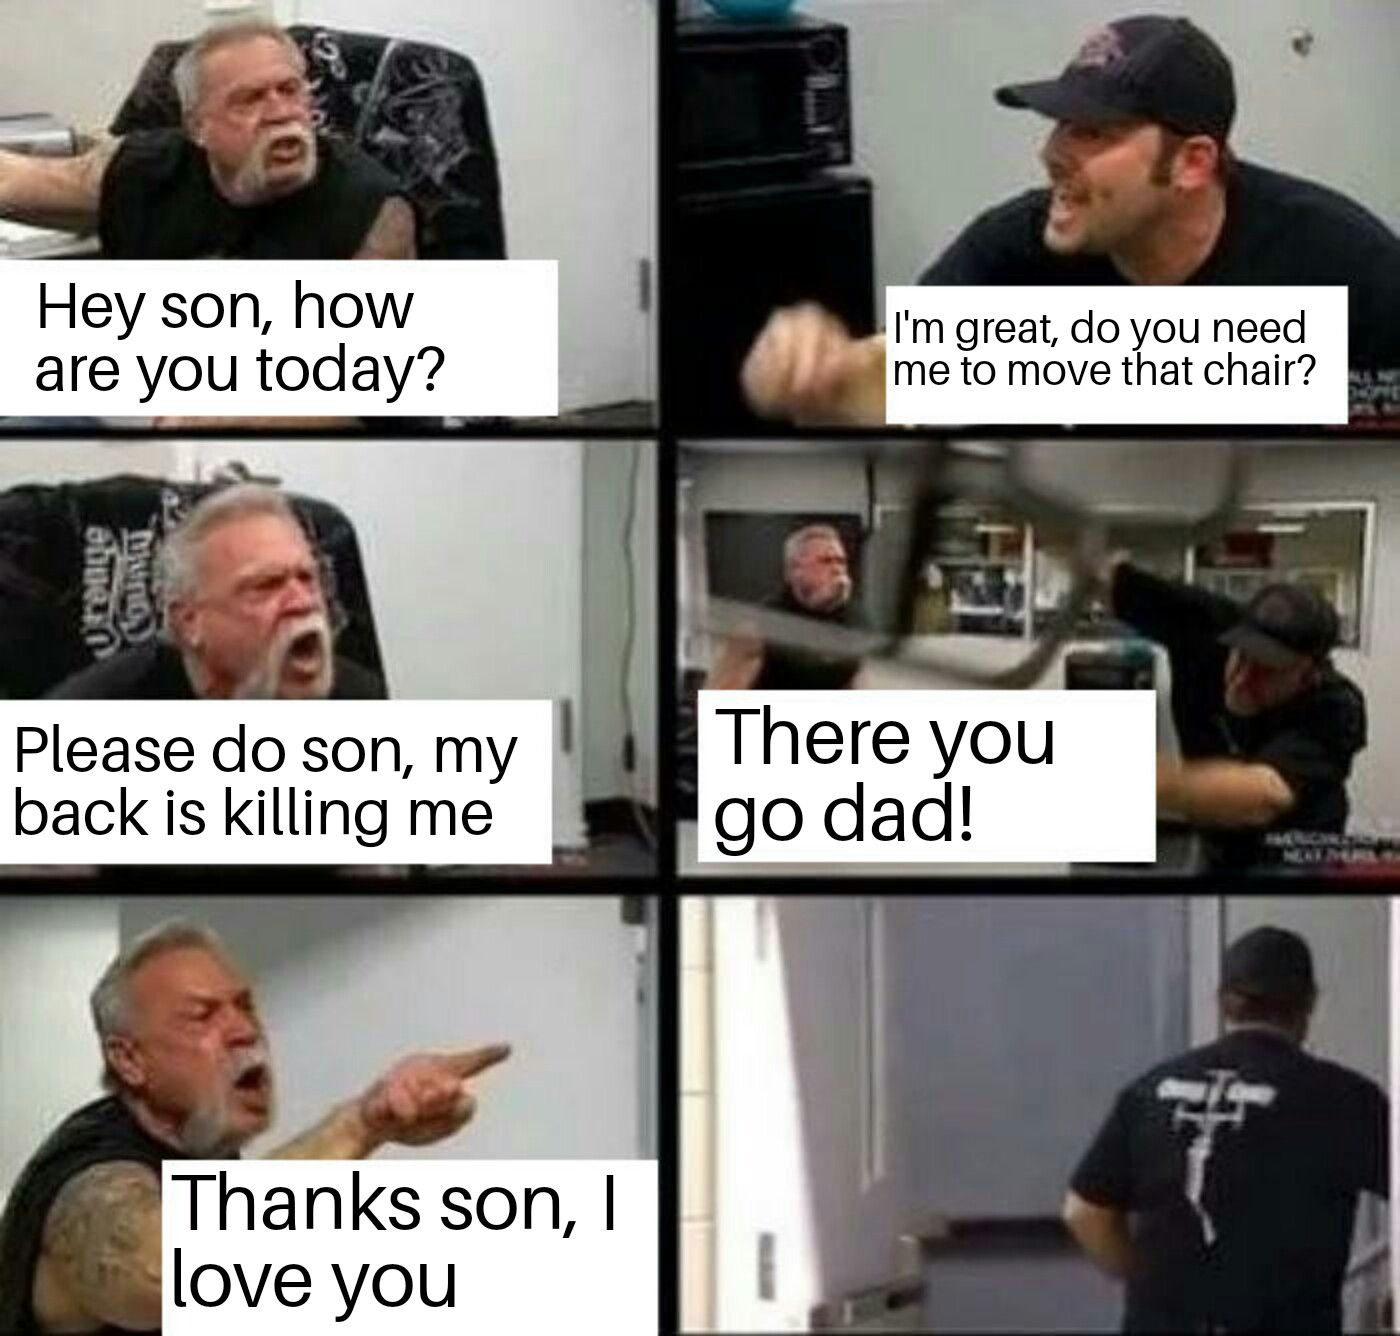 Thanks son!